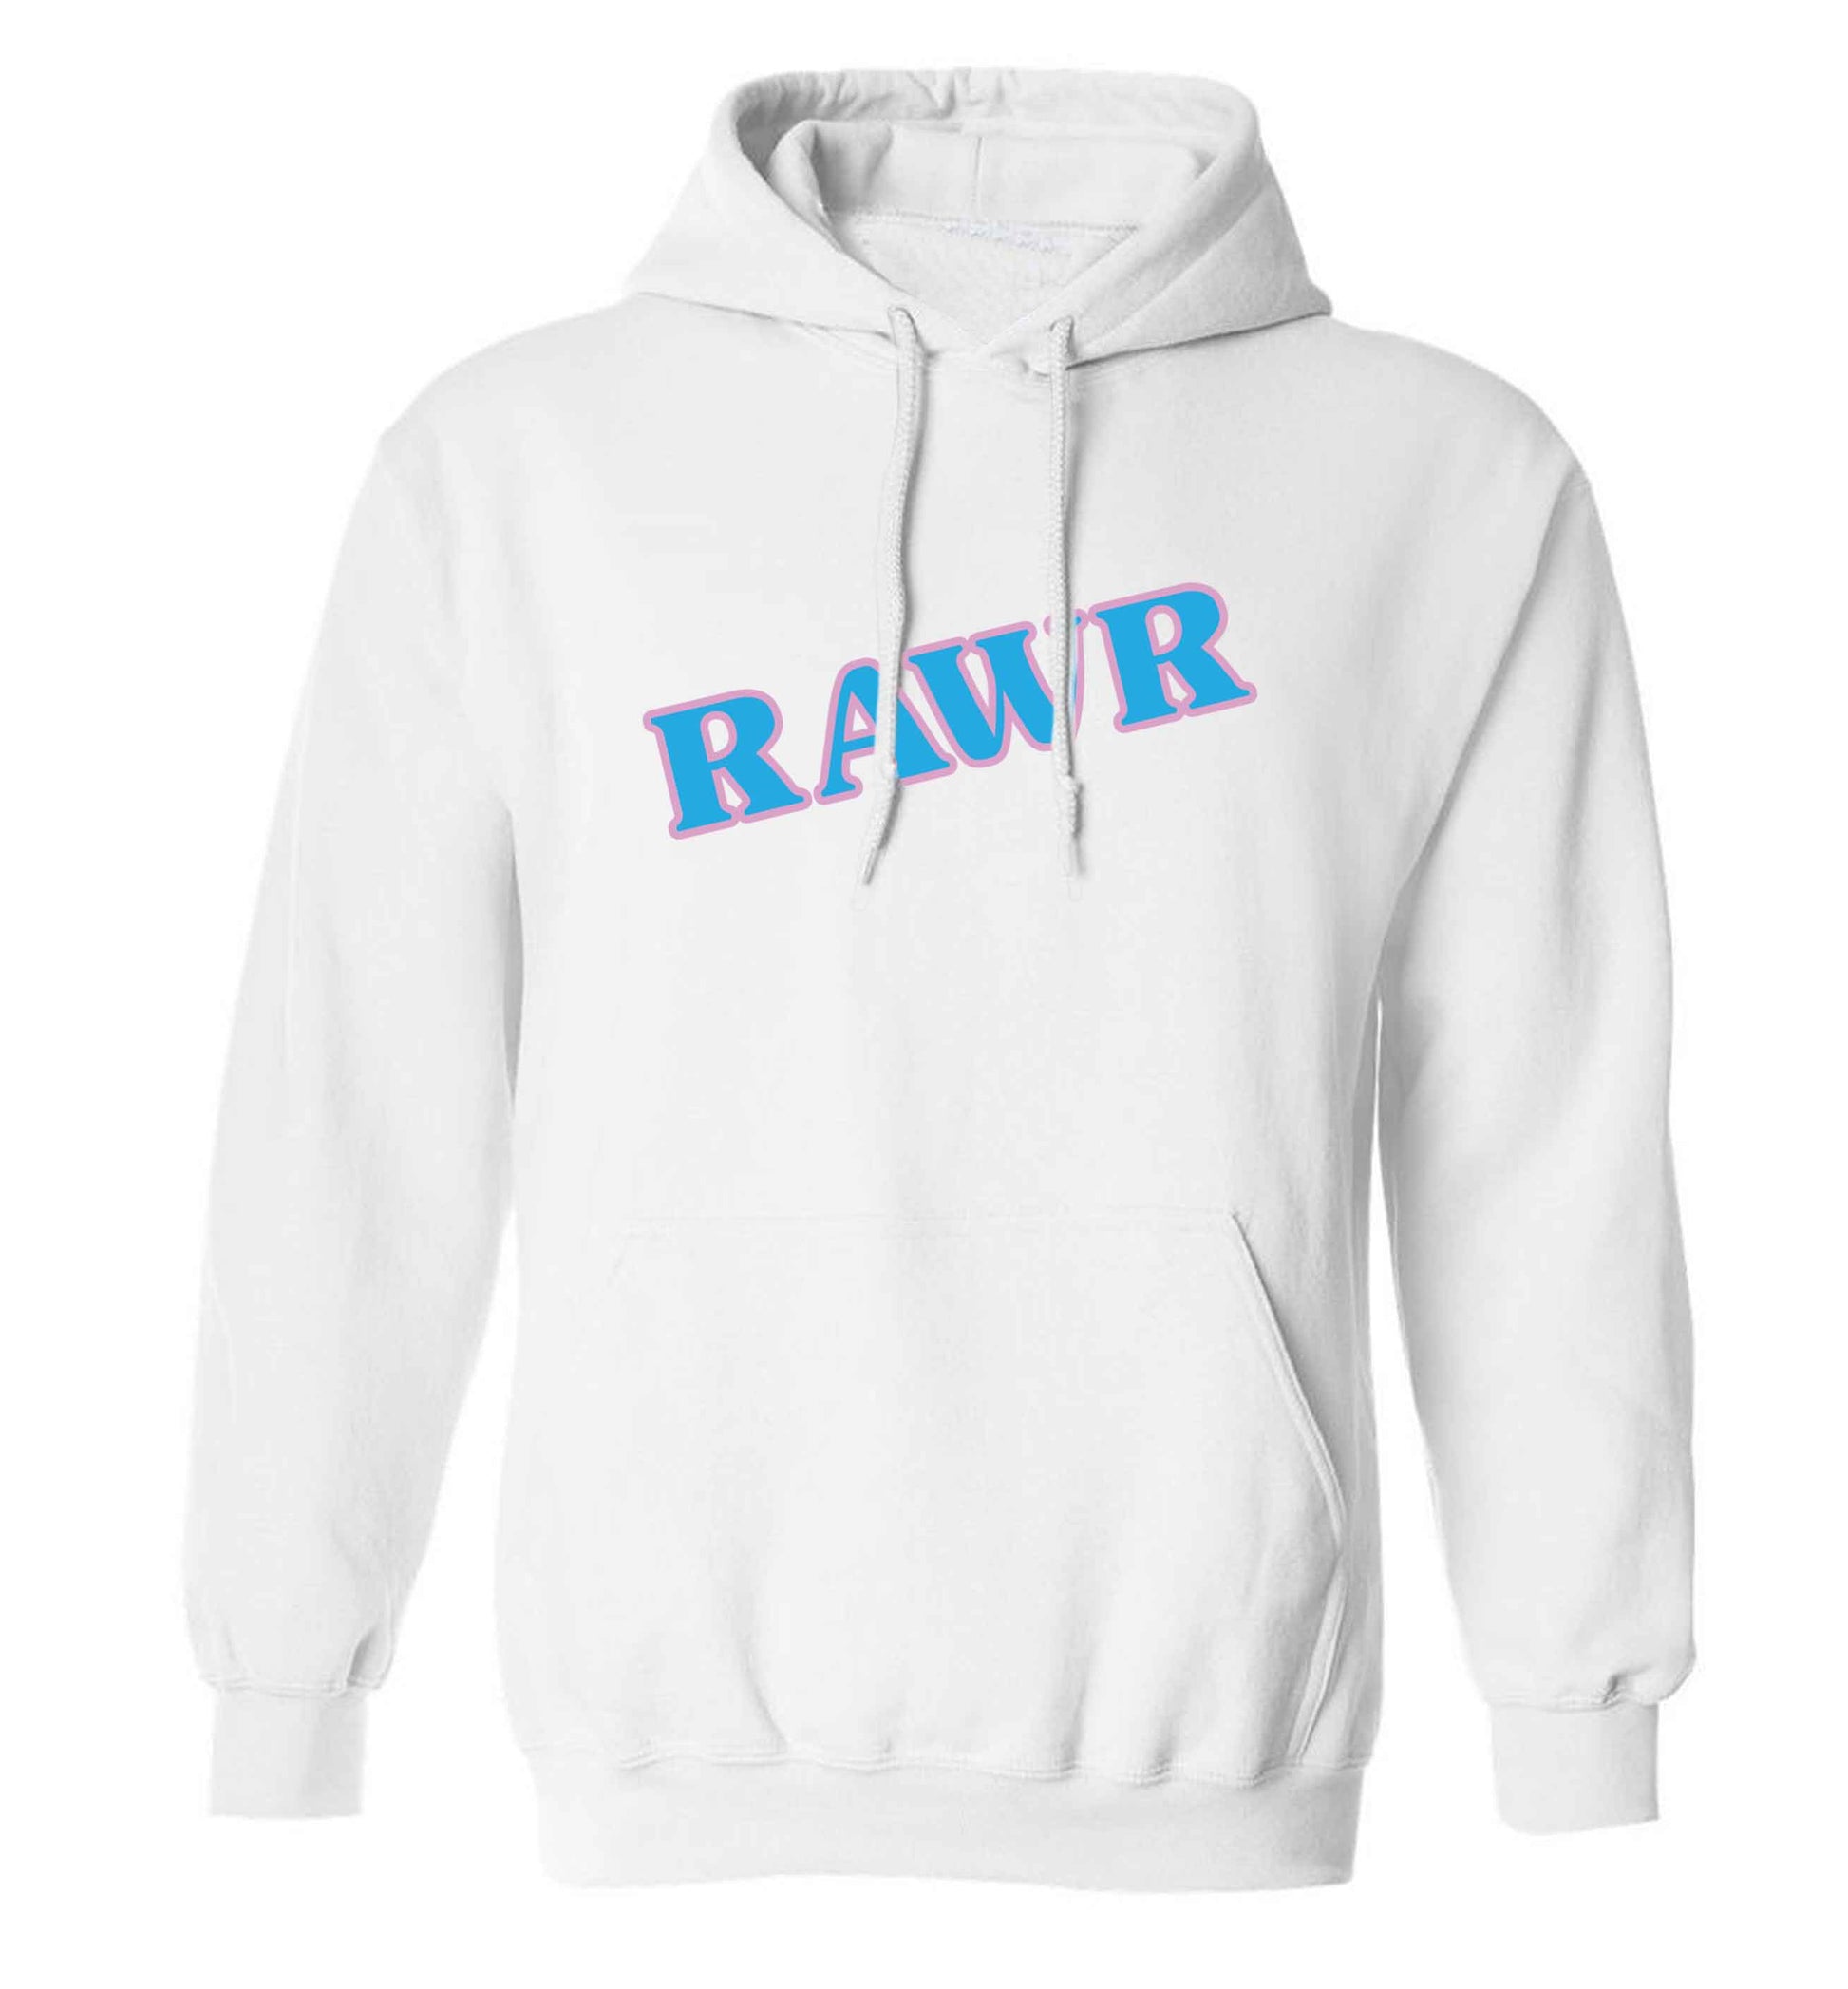 Rawr adults unisex white hoodie 2XL